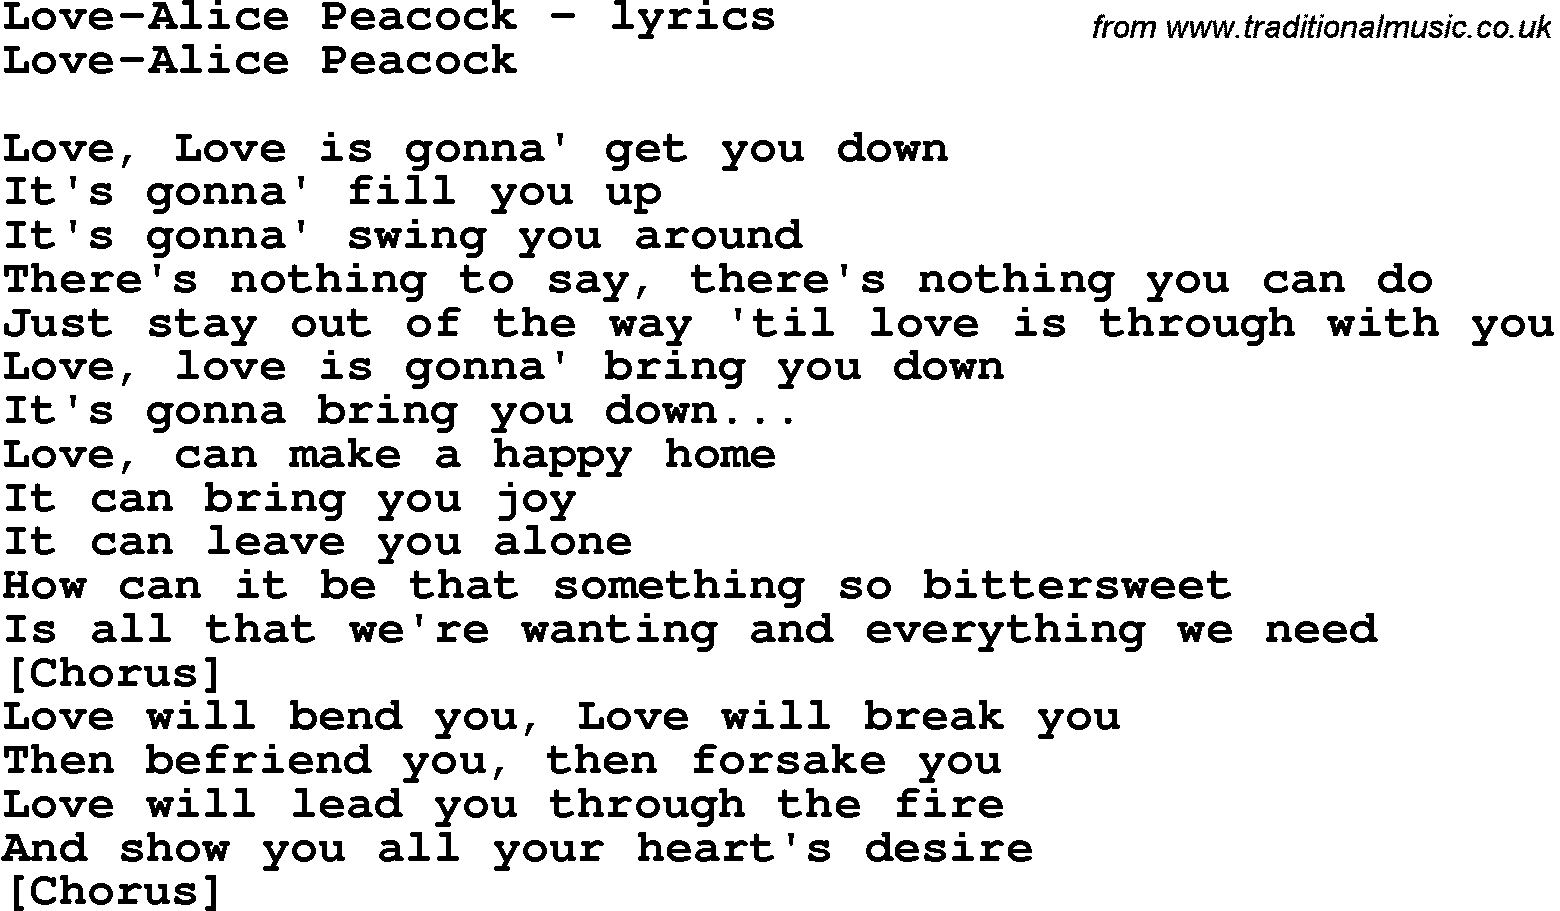 Love Song Lyrics for: Love-Alice Peacock